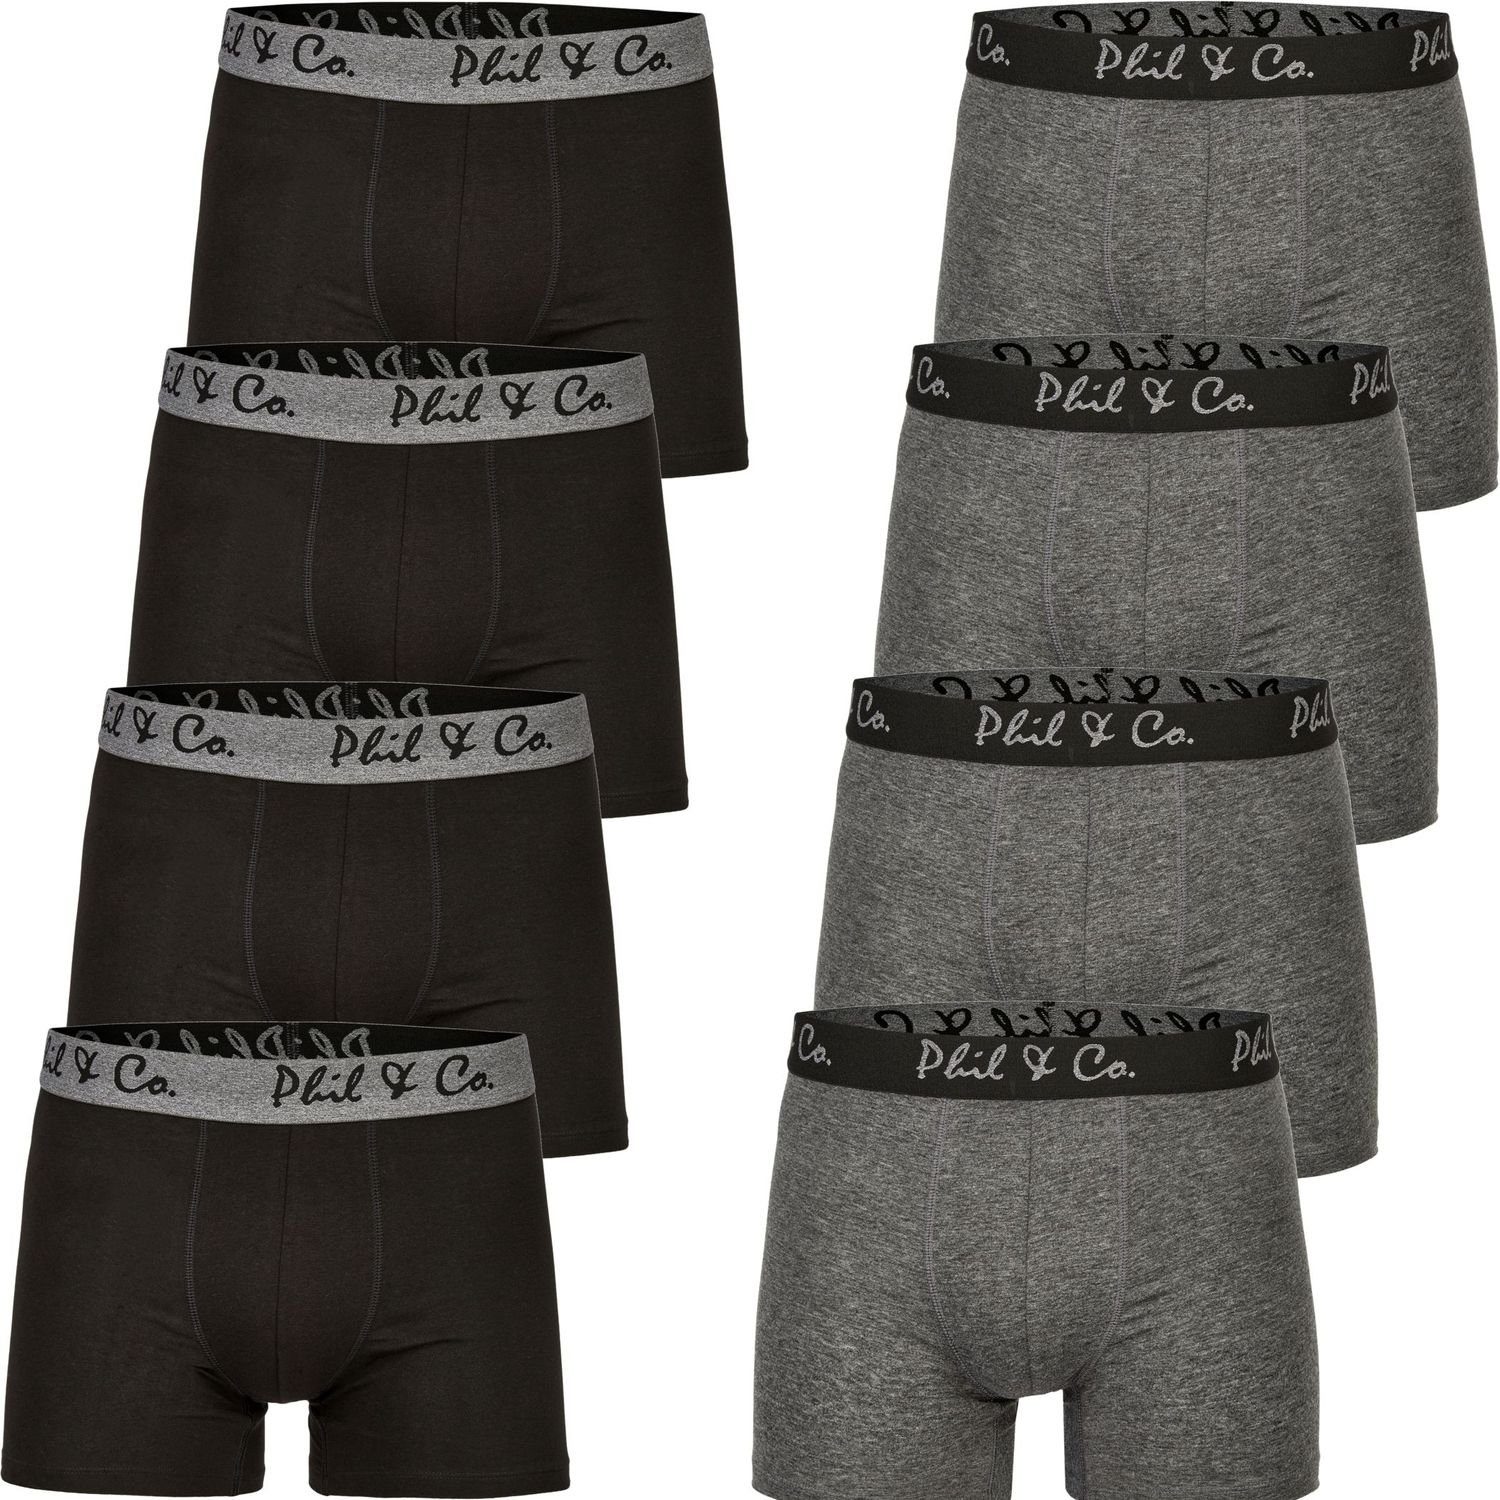 Phil & Co. Boxershorts PHIL & Co Berlin 8er Pack Herren Boxershorts Pants  Trunk Unterhosen Jersey S - 4XL schwarz anthrazit grau (1-St)